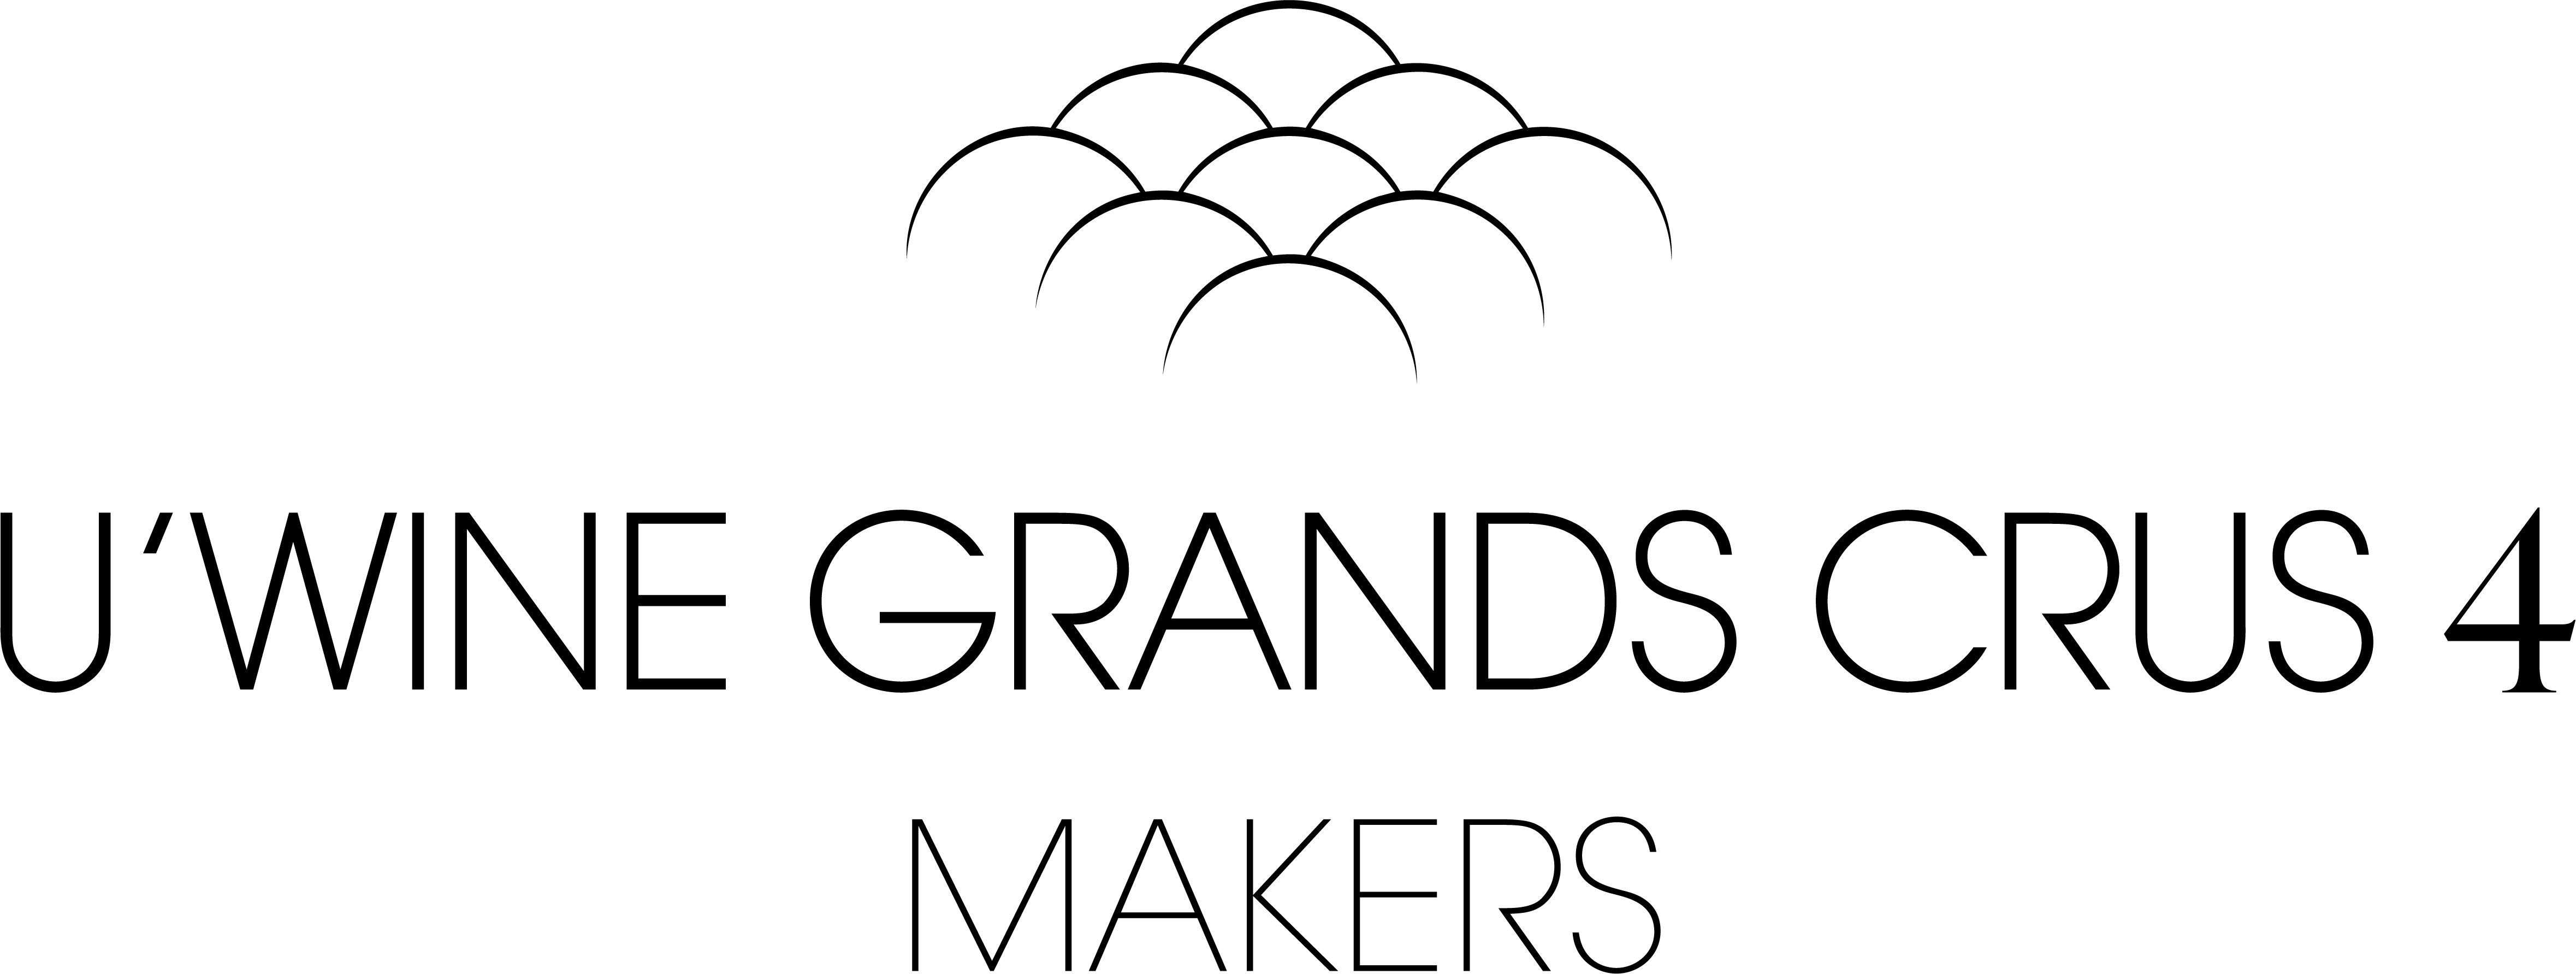 UWGC4 logo